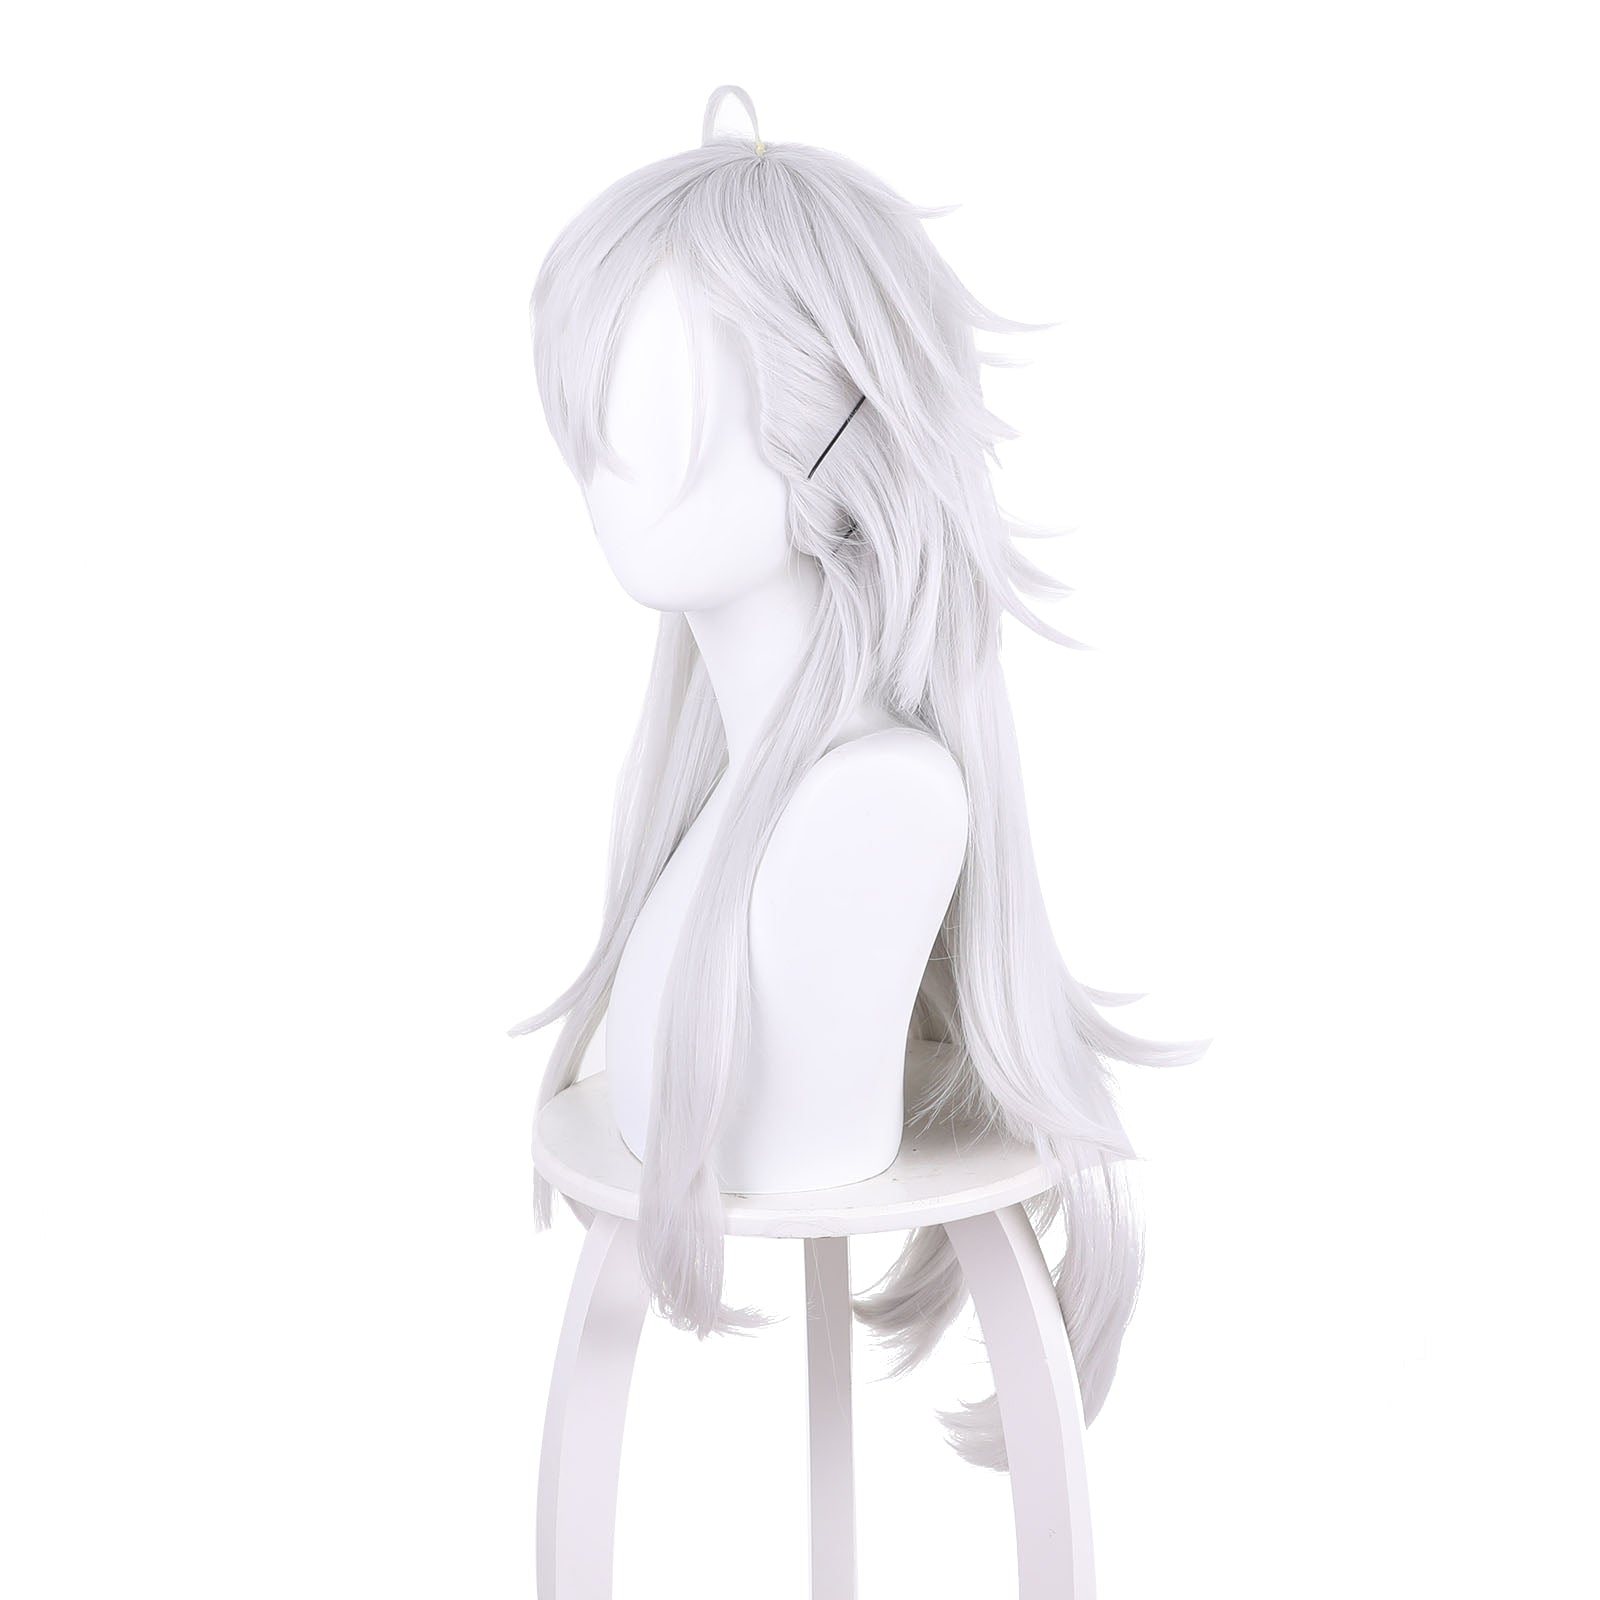 Rulercosplay Anime NIJISANJI Kuzuha silvery white Long Cosplay Wig